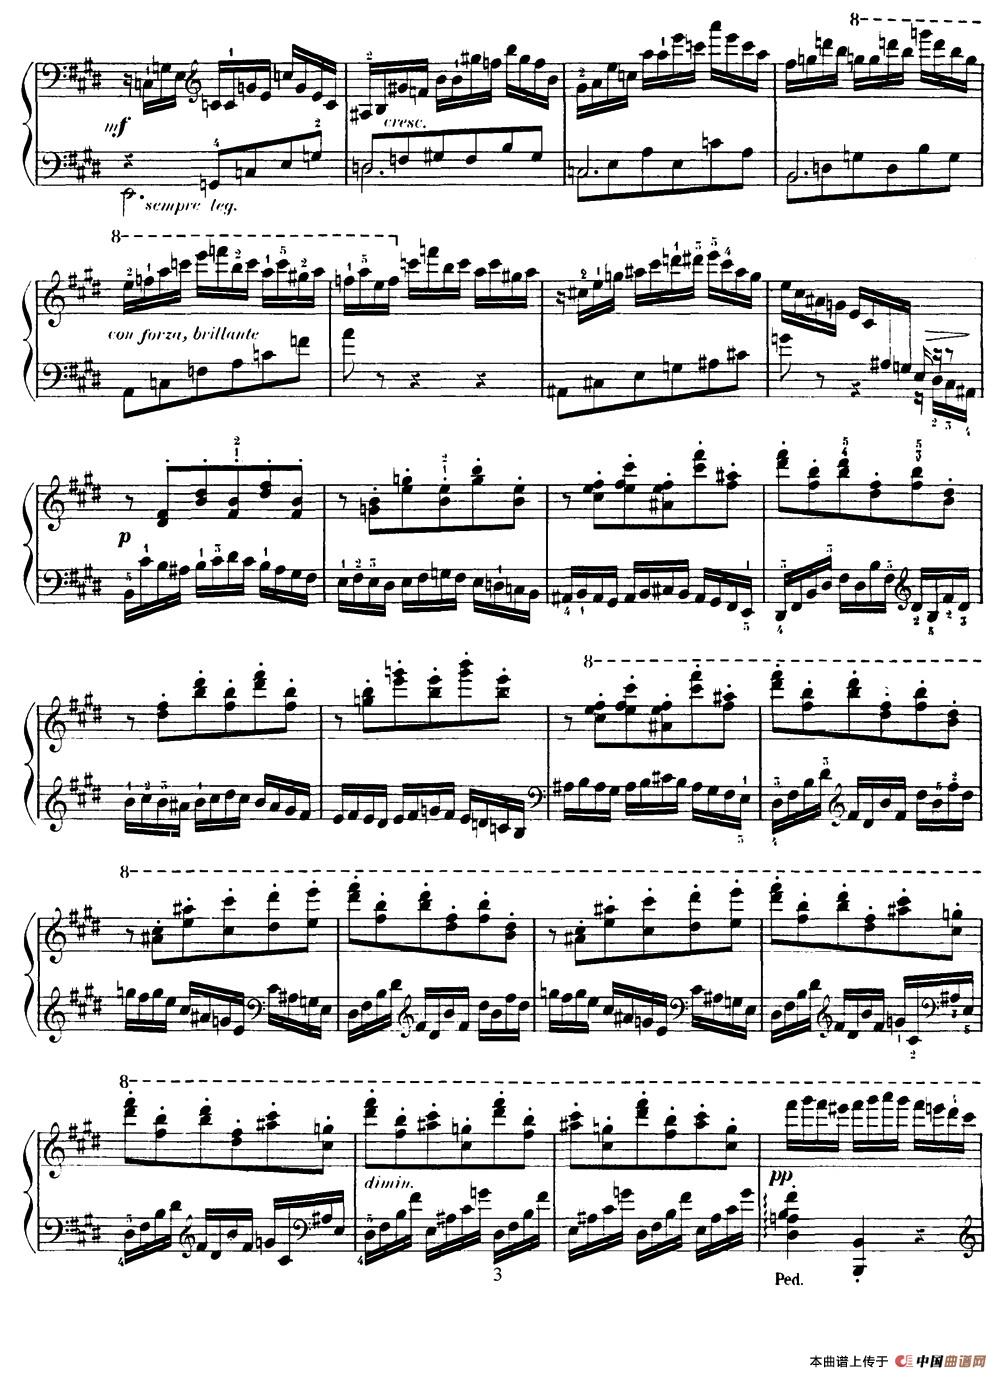 15 Etudes de Virtuosité, Op.72  No.1  （十五首钢琴练习曲之一）(1)_003.jpg